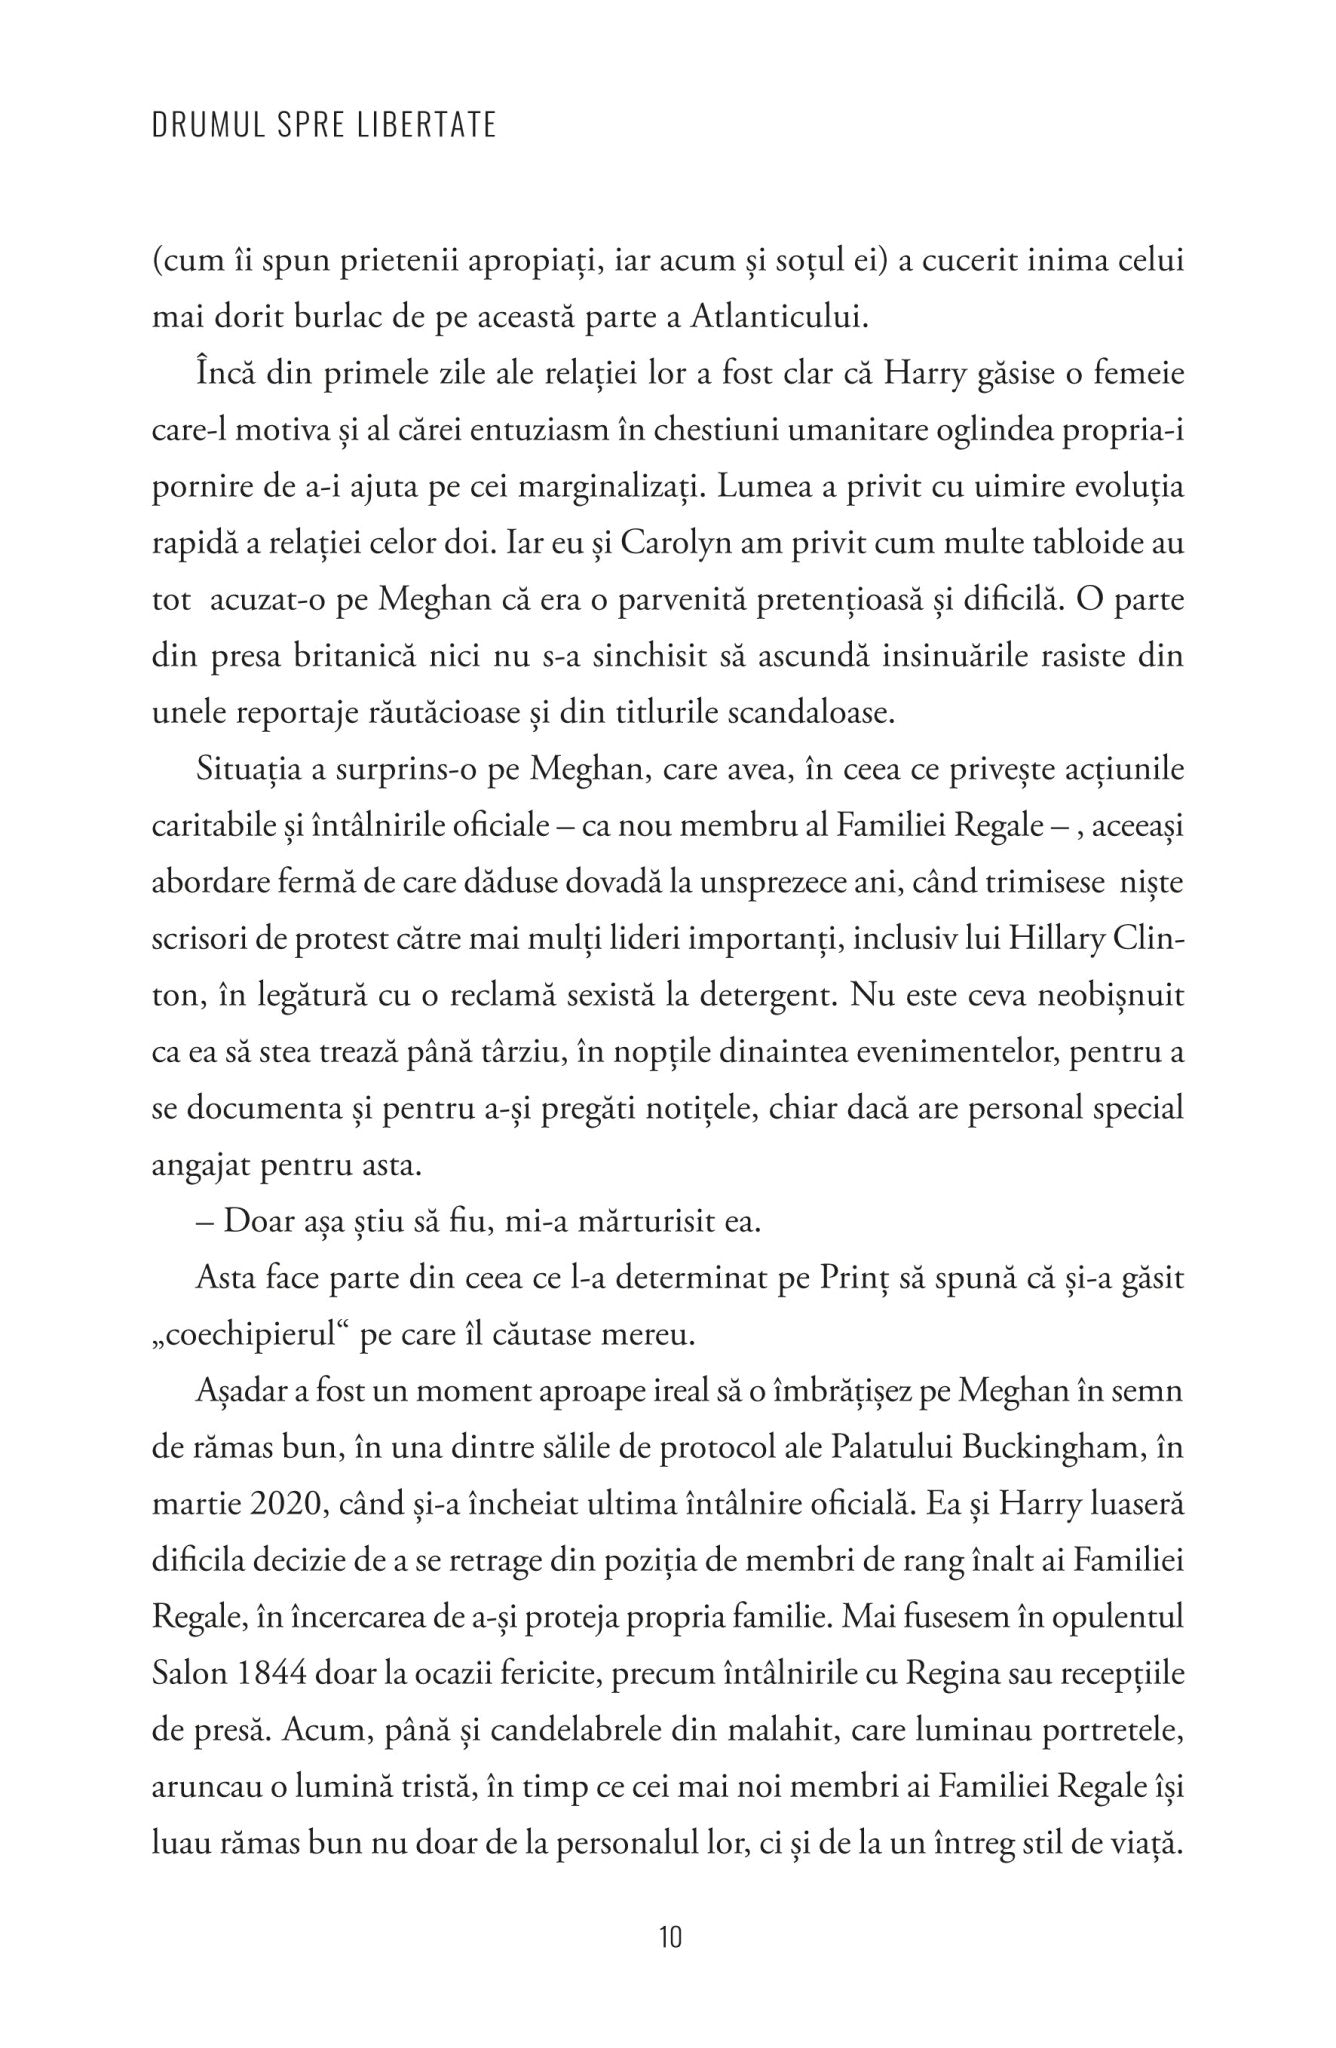 Harry & Meghan - Drumul spre libertate. Odiseea unei familii regale moderne, de Omid Scobie si Carolyn Durand - Ed. digitala - PDF - Publisol.ro